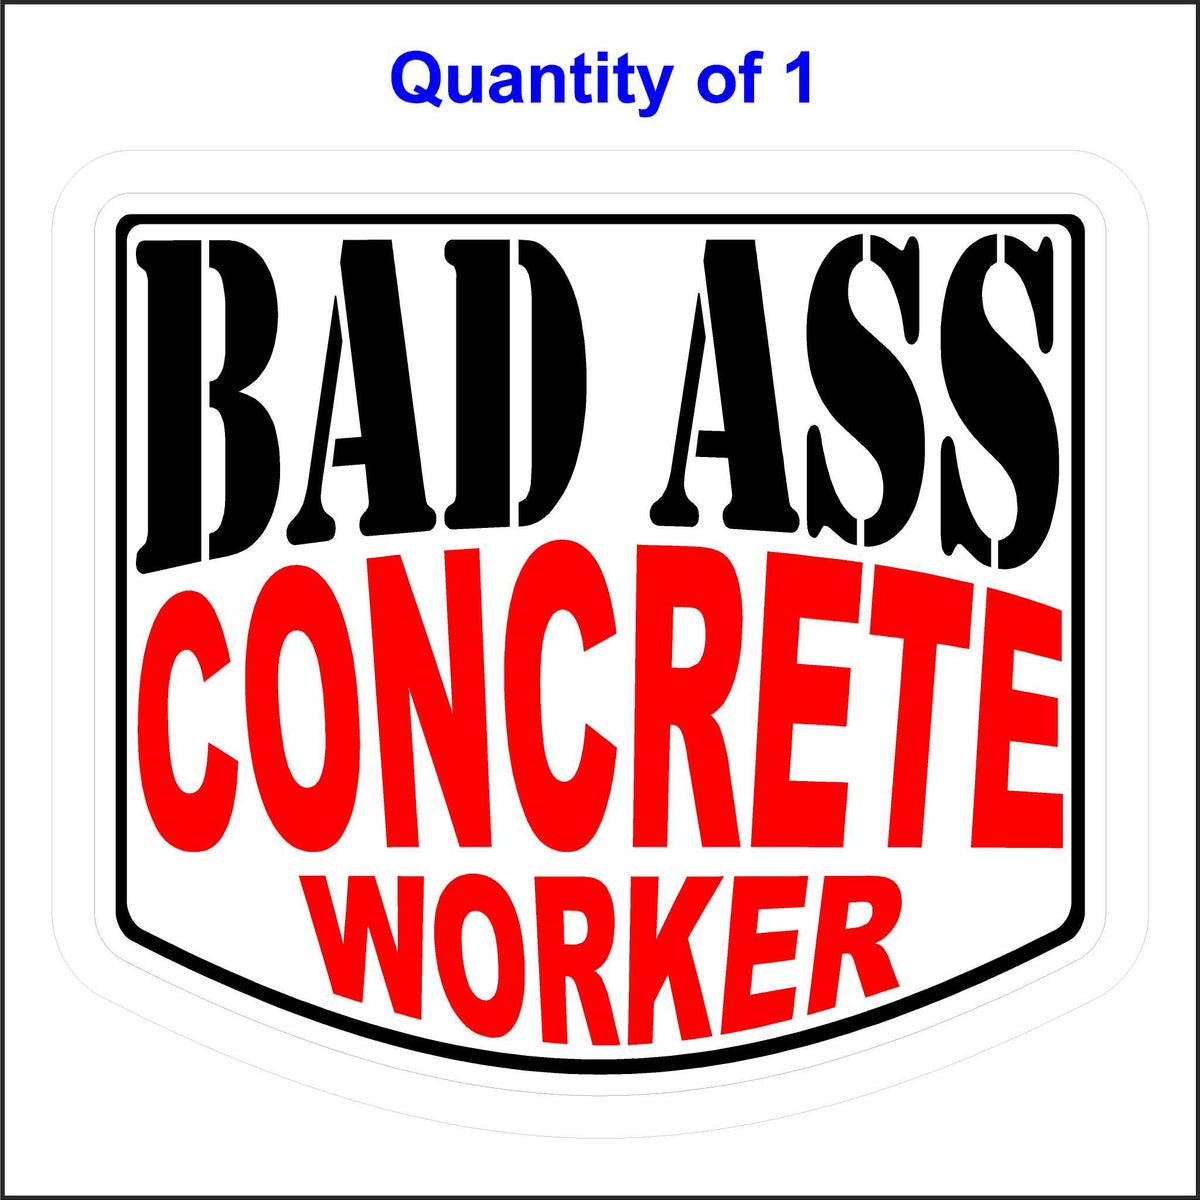 Bad Ass Concrete Worker Sticker.